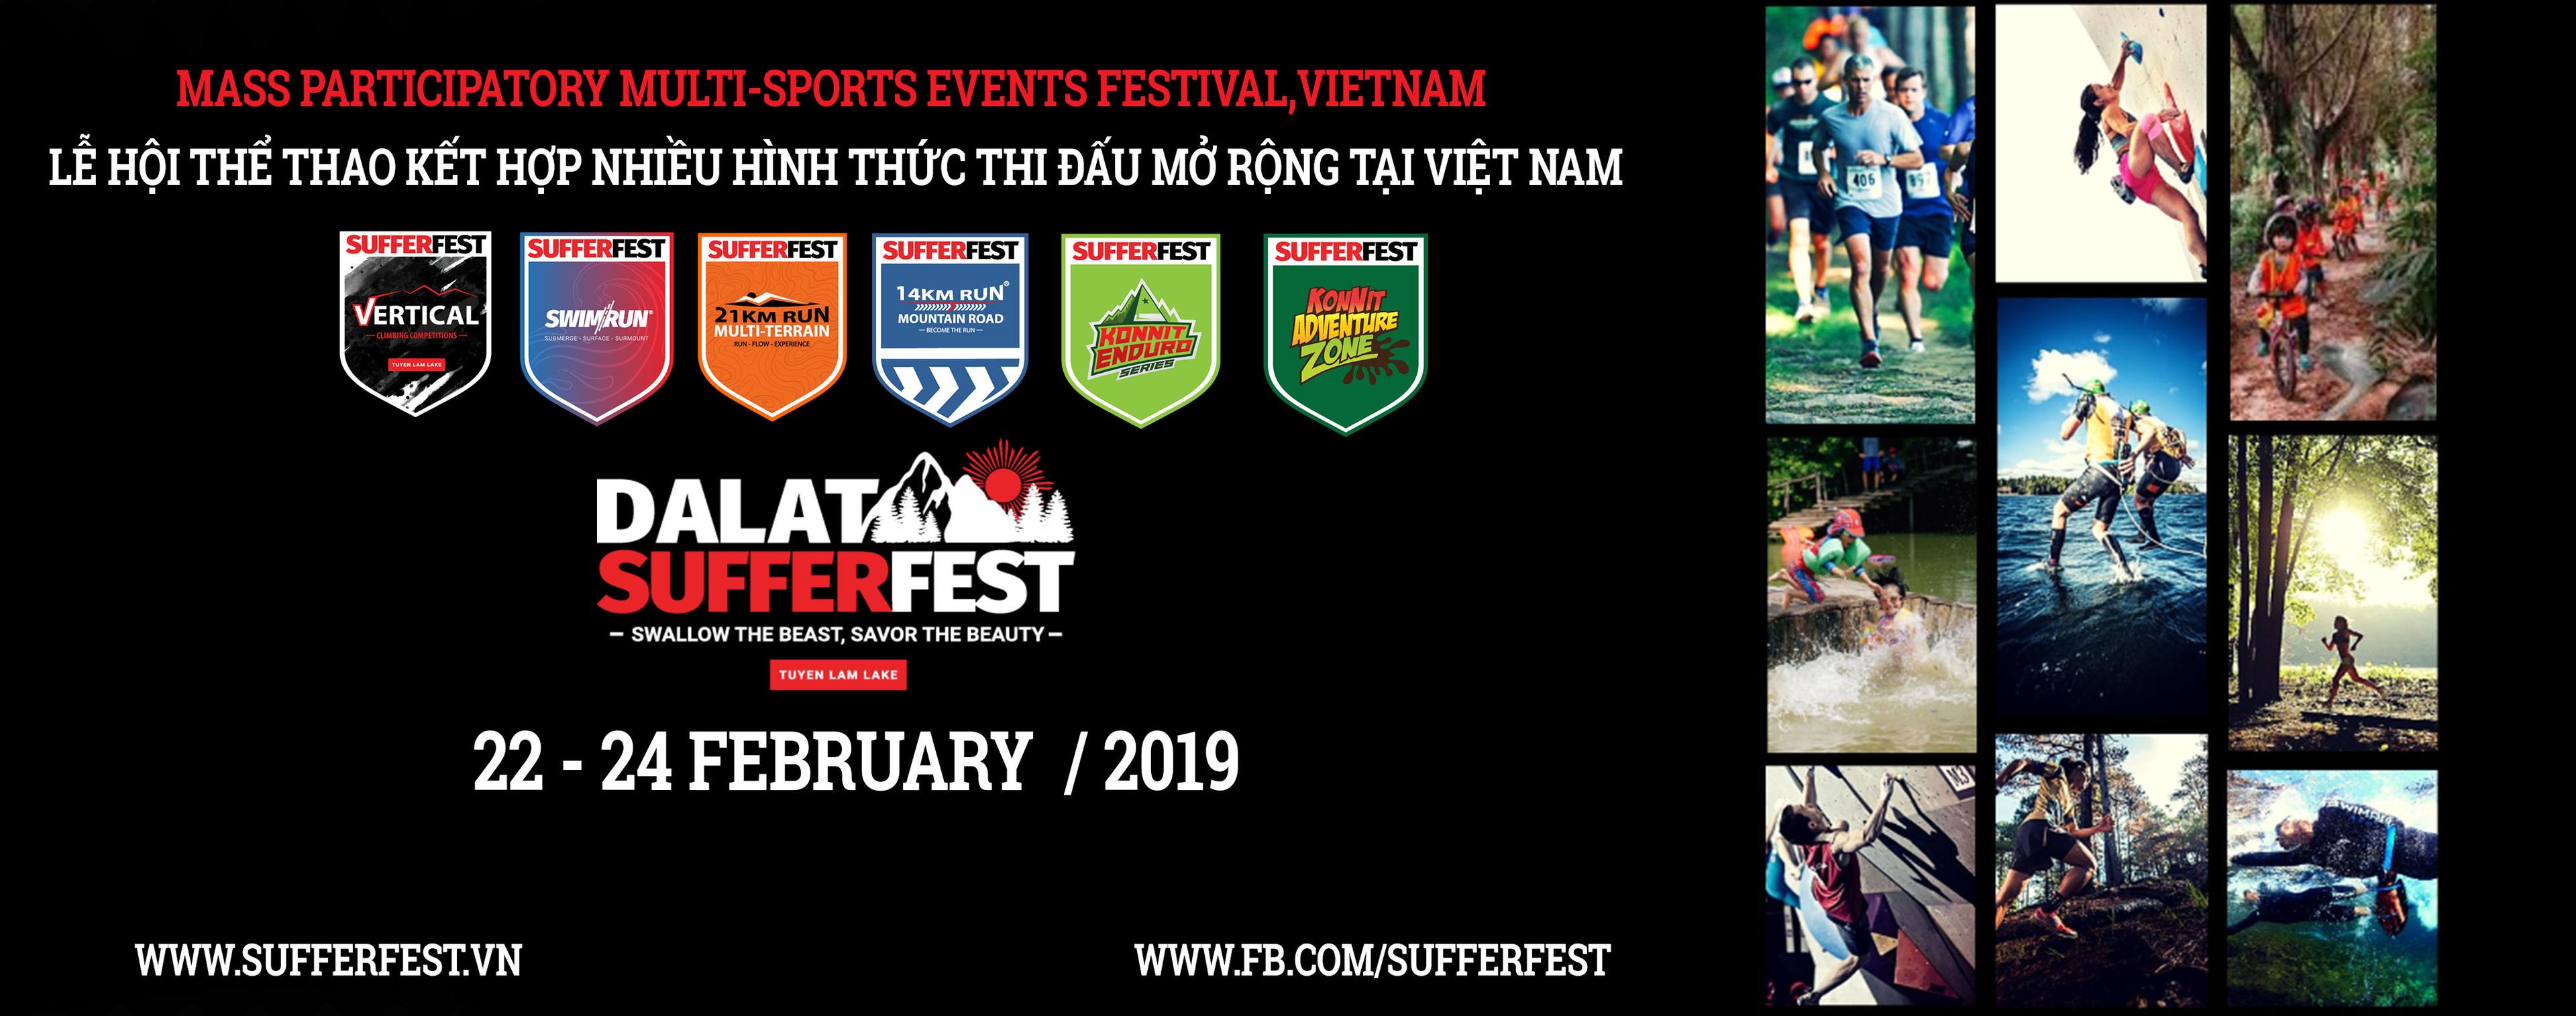 Đà Lạt Suffer Fest 2019